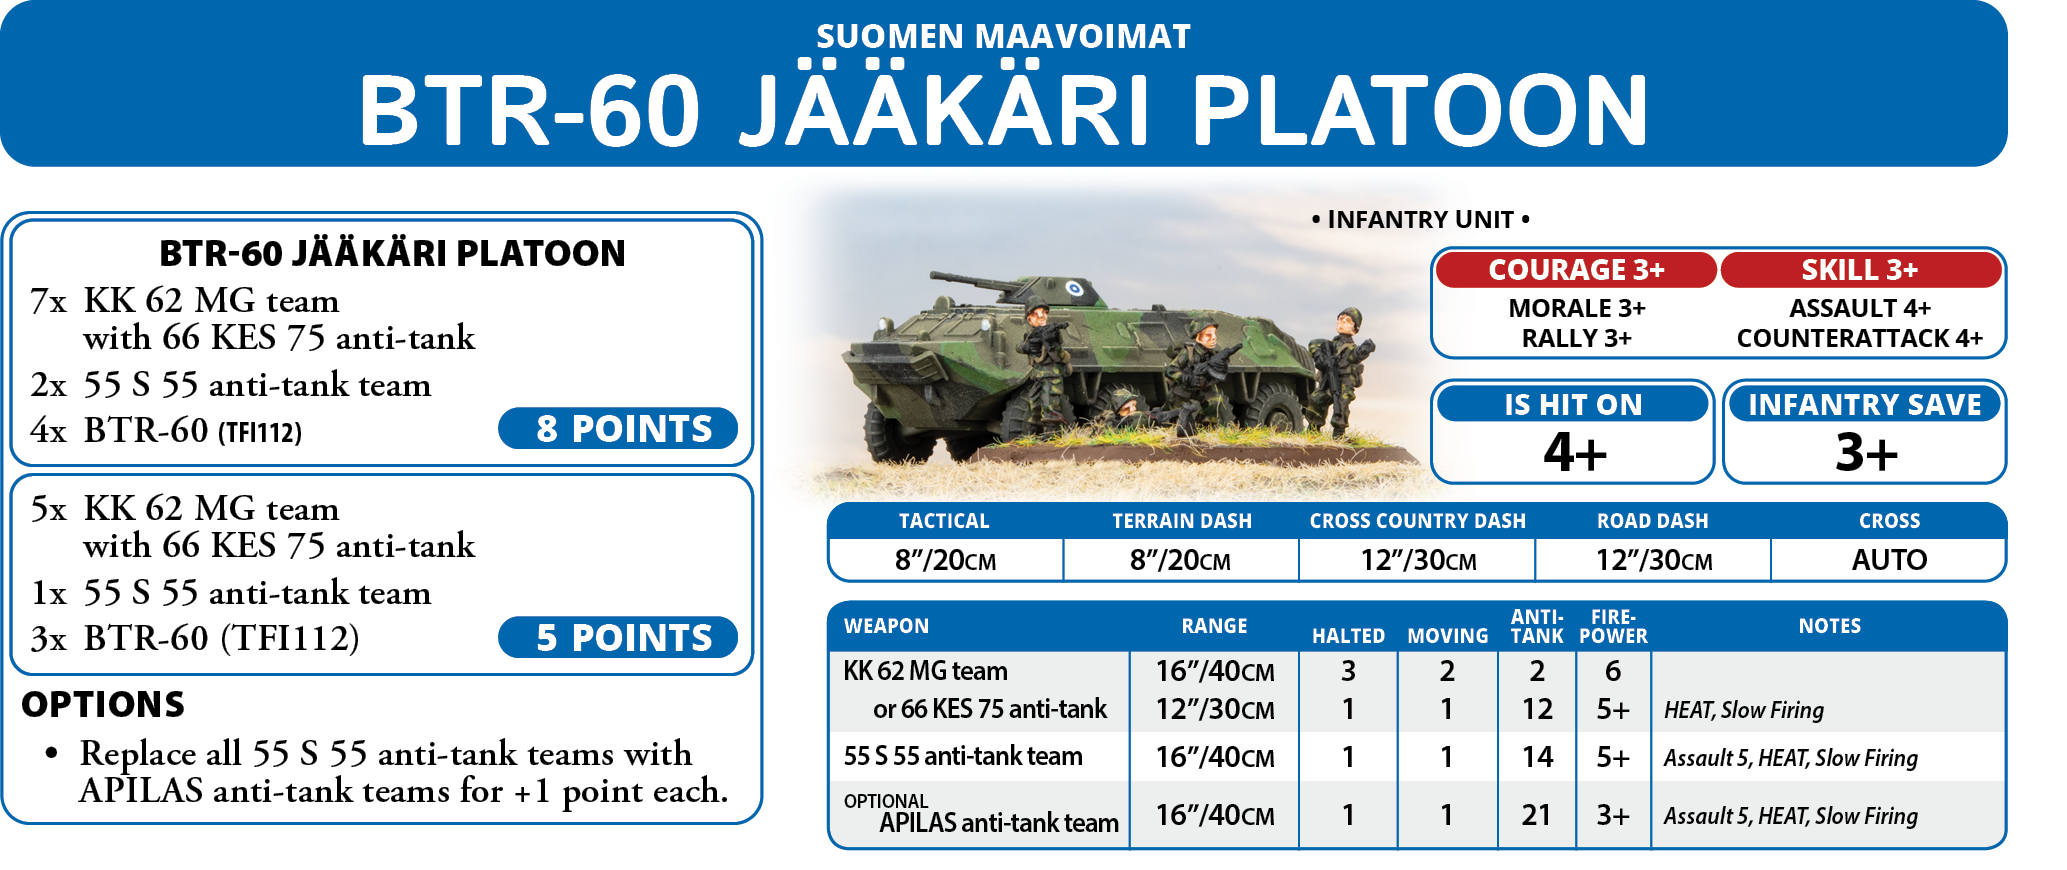 BTR-60 Jakaari Platoon